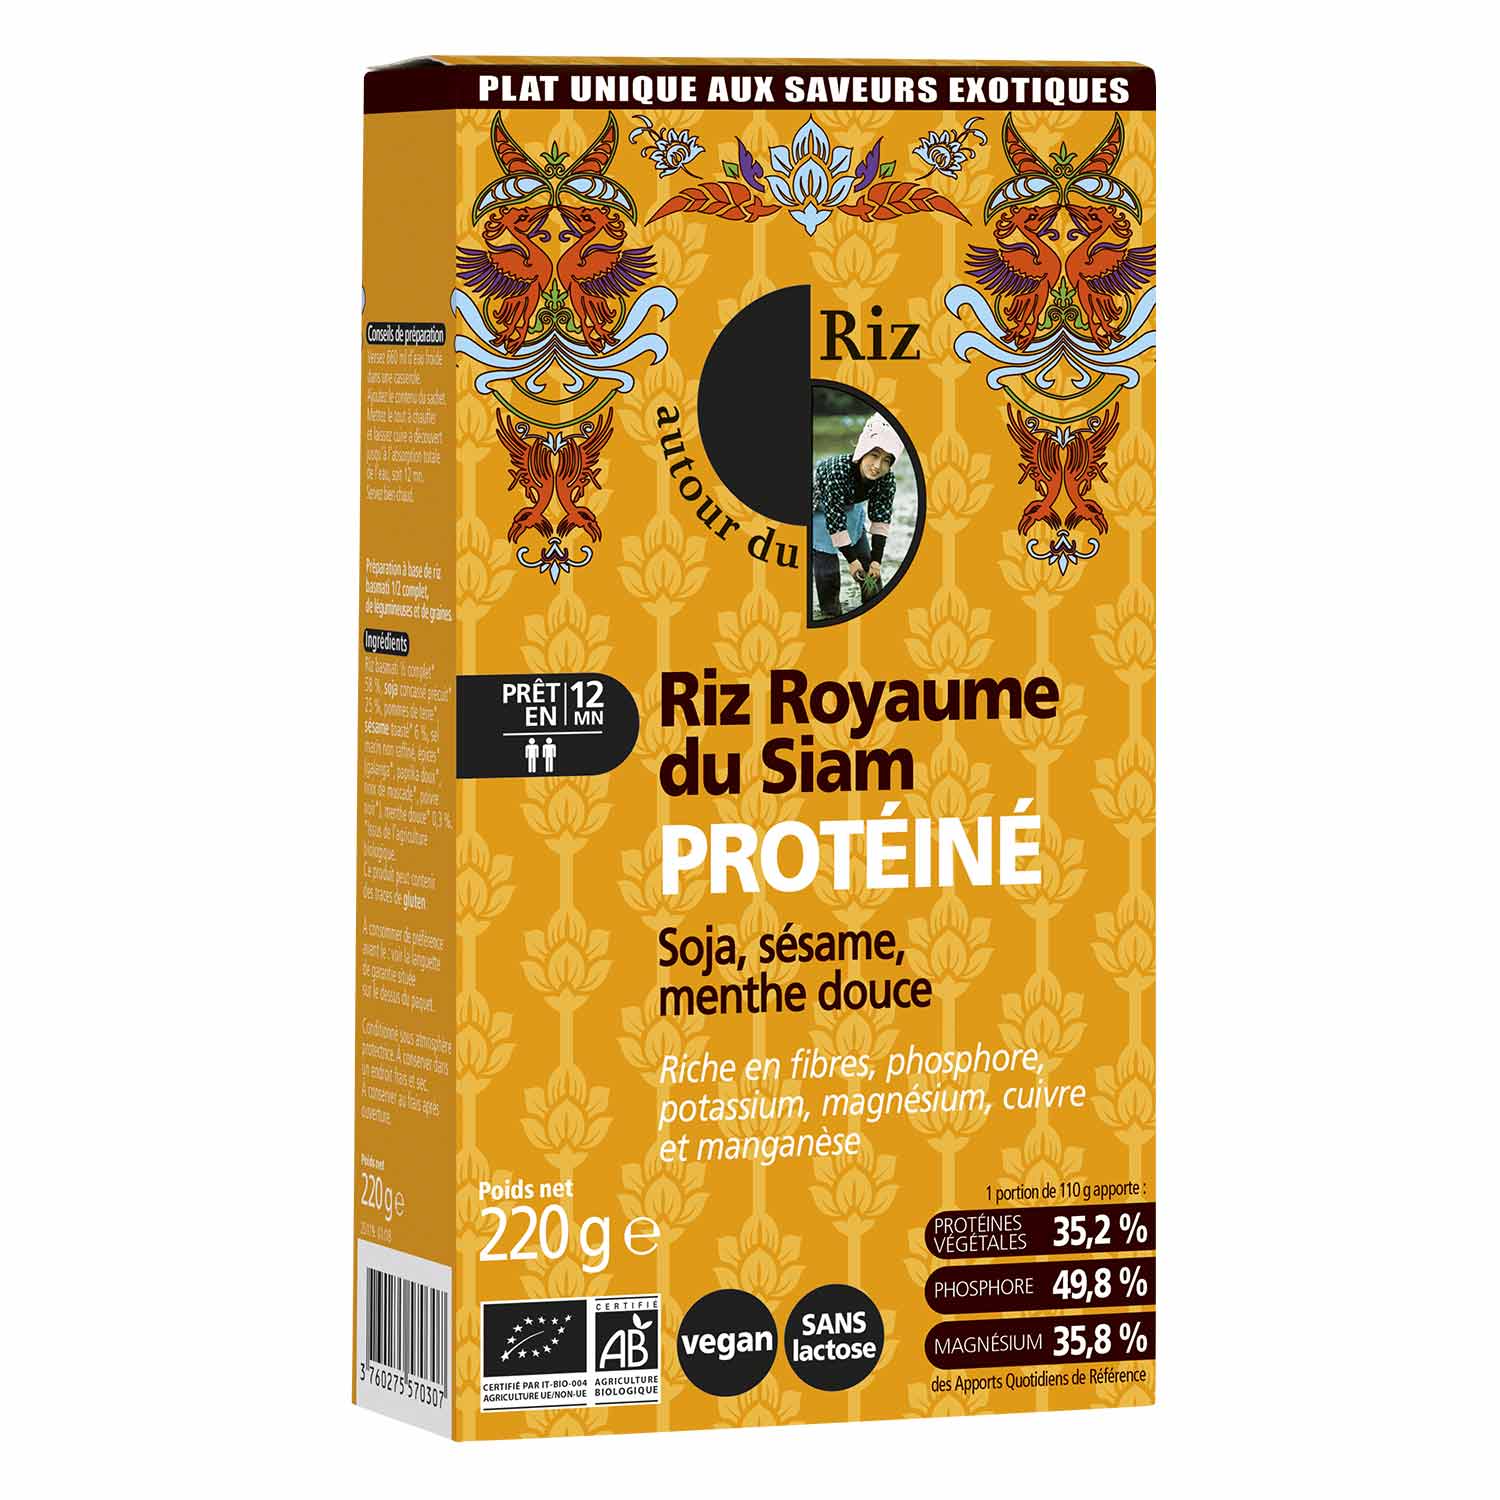 riz-royaume-du-siam-Proteine.jpg